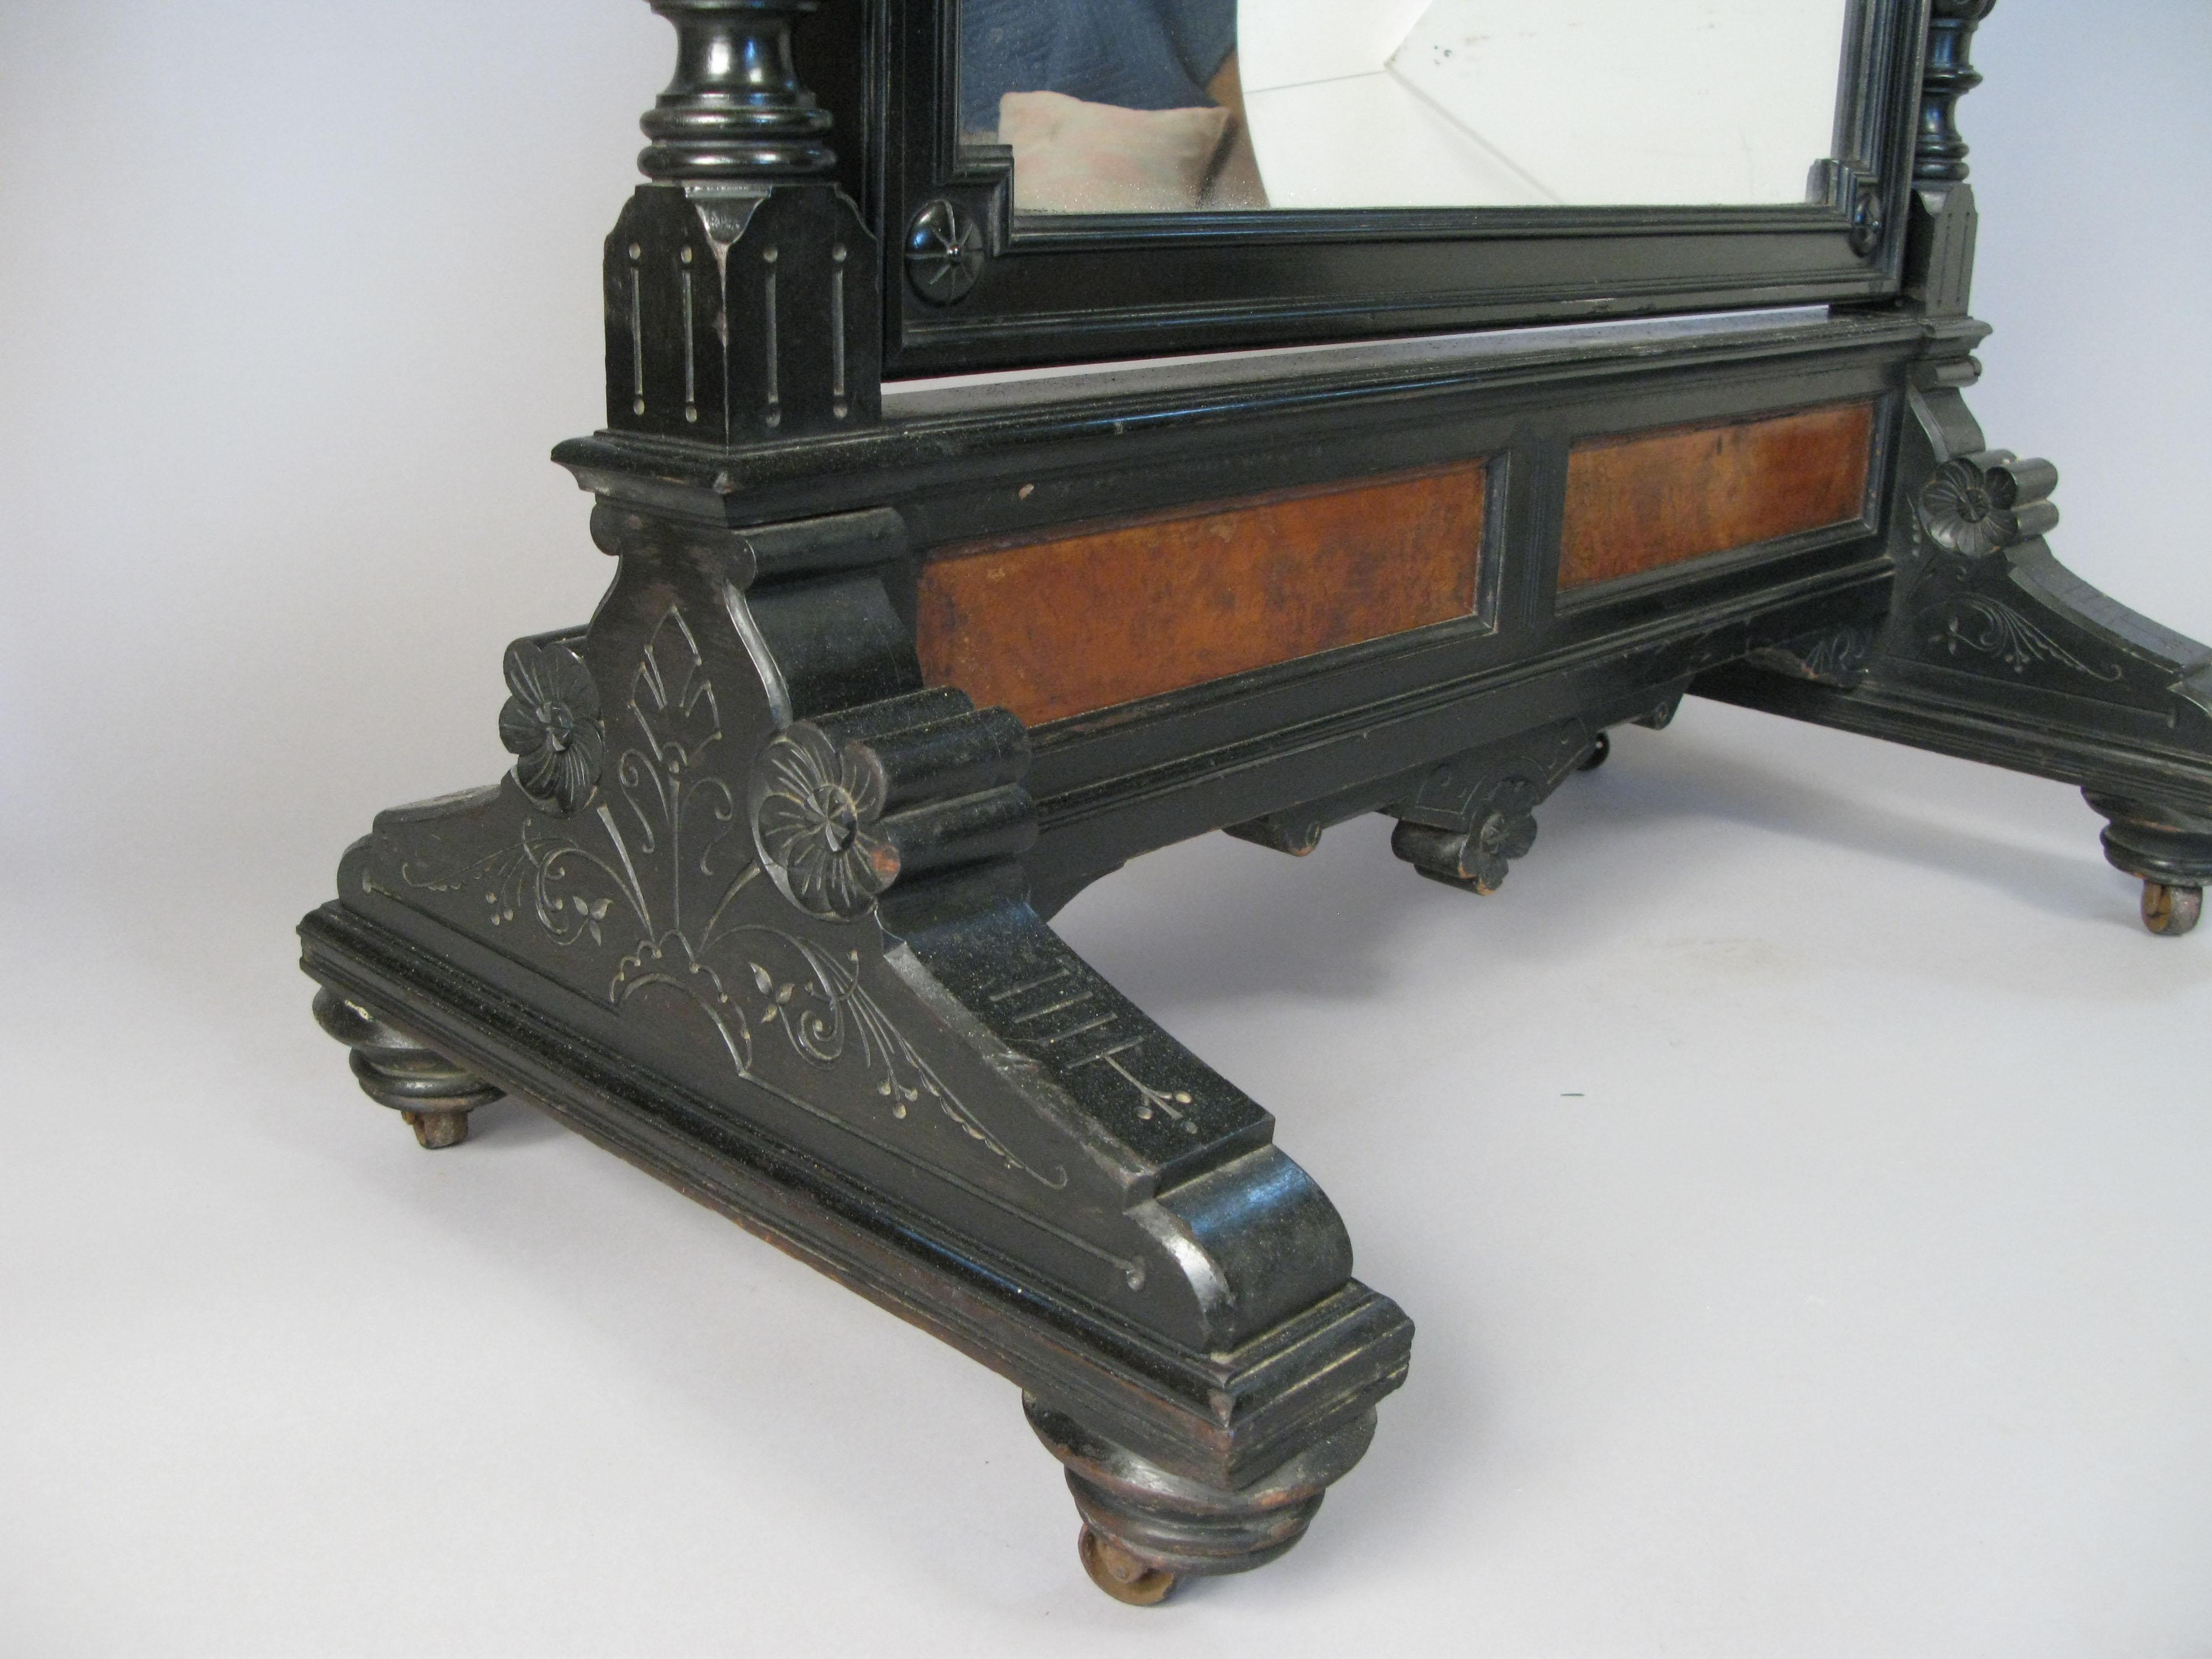 Antique 19th Century Ebonized and Burled Cheval Mirror 1